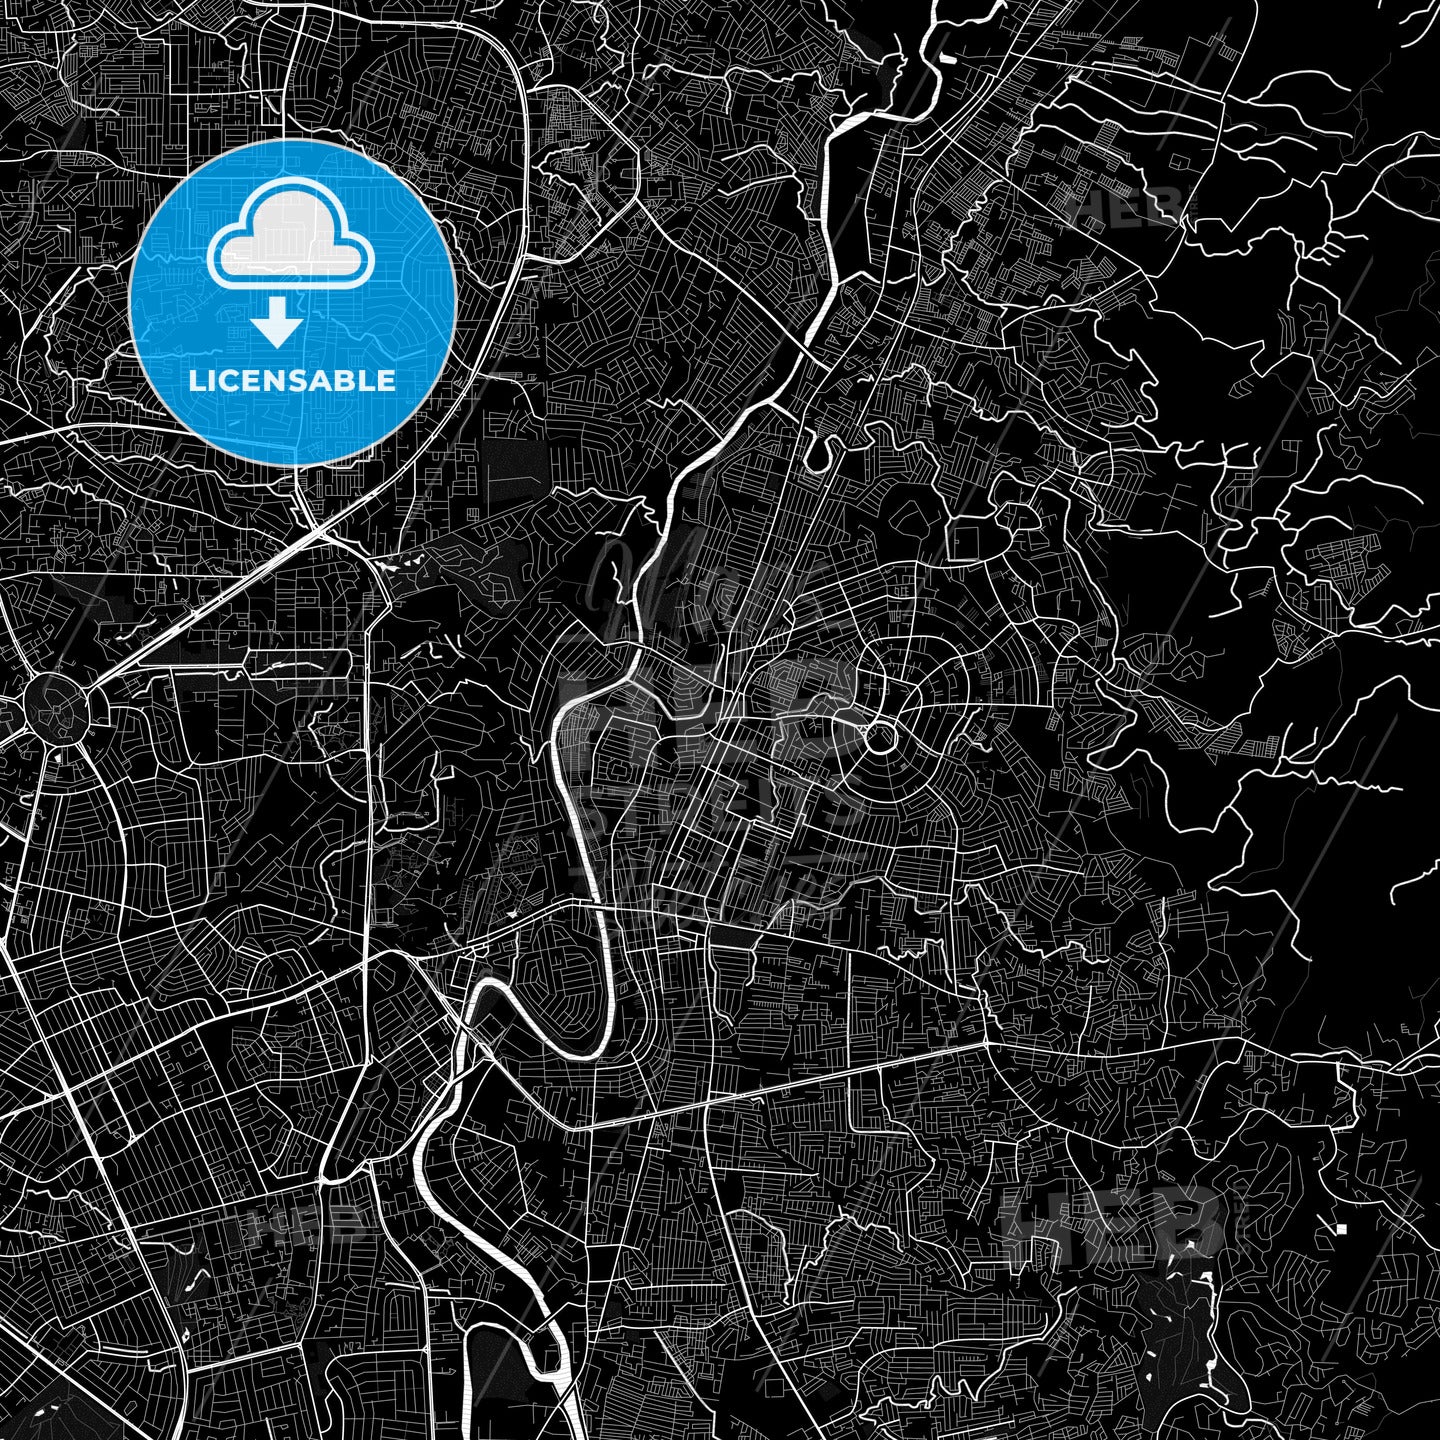 Marikina, Philippines PDF map